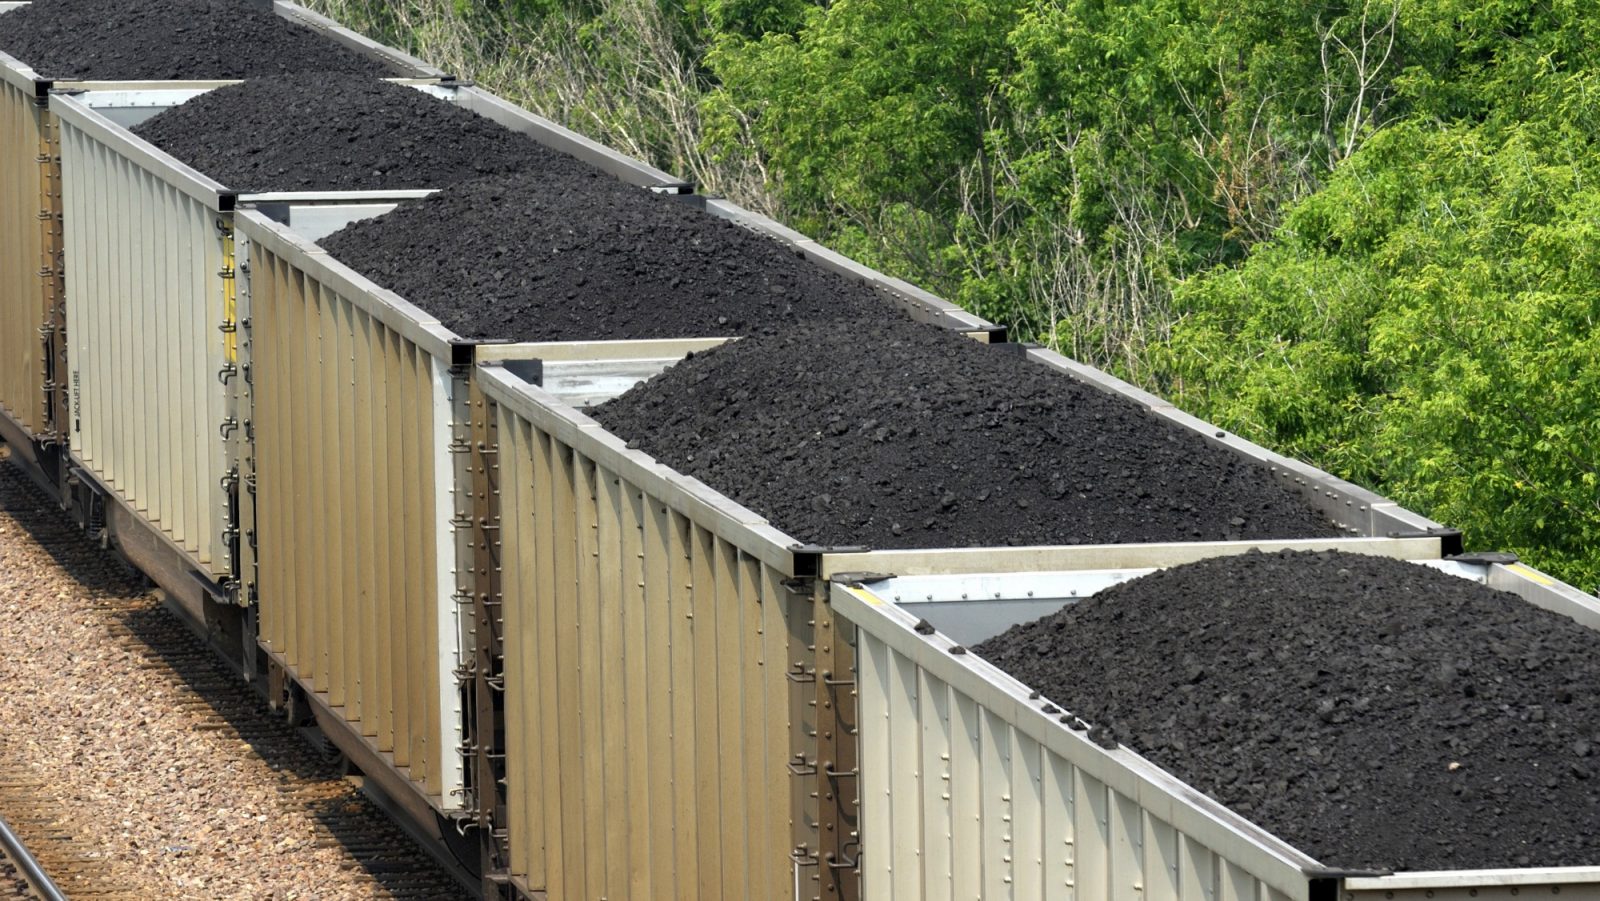 A coal train